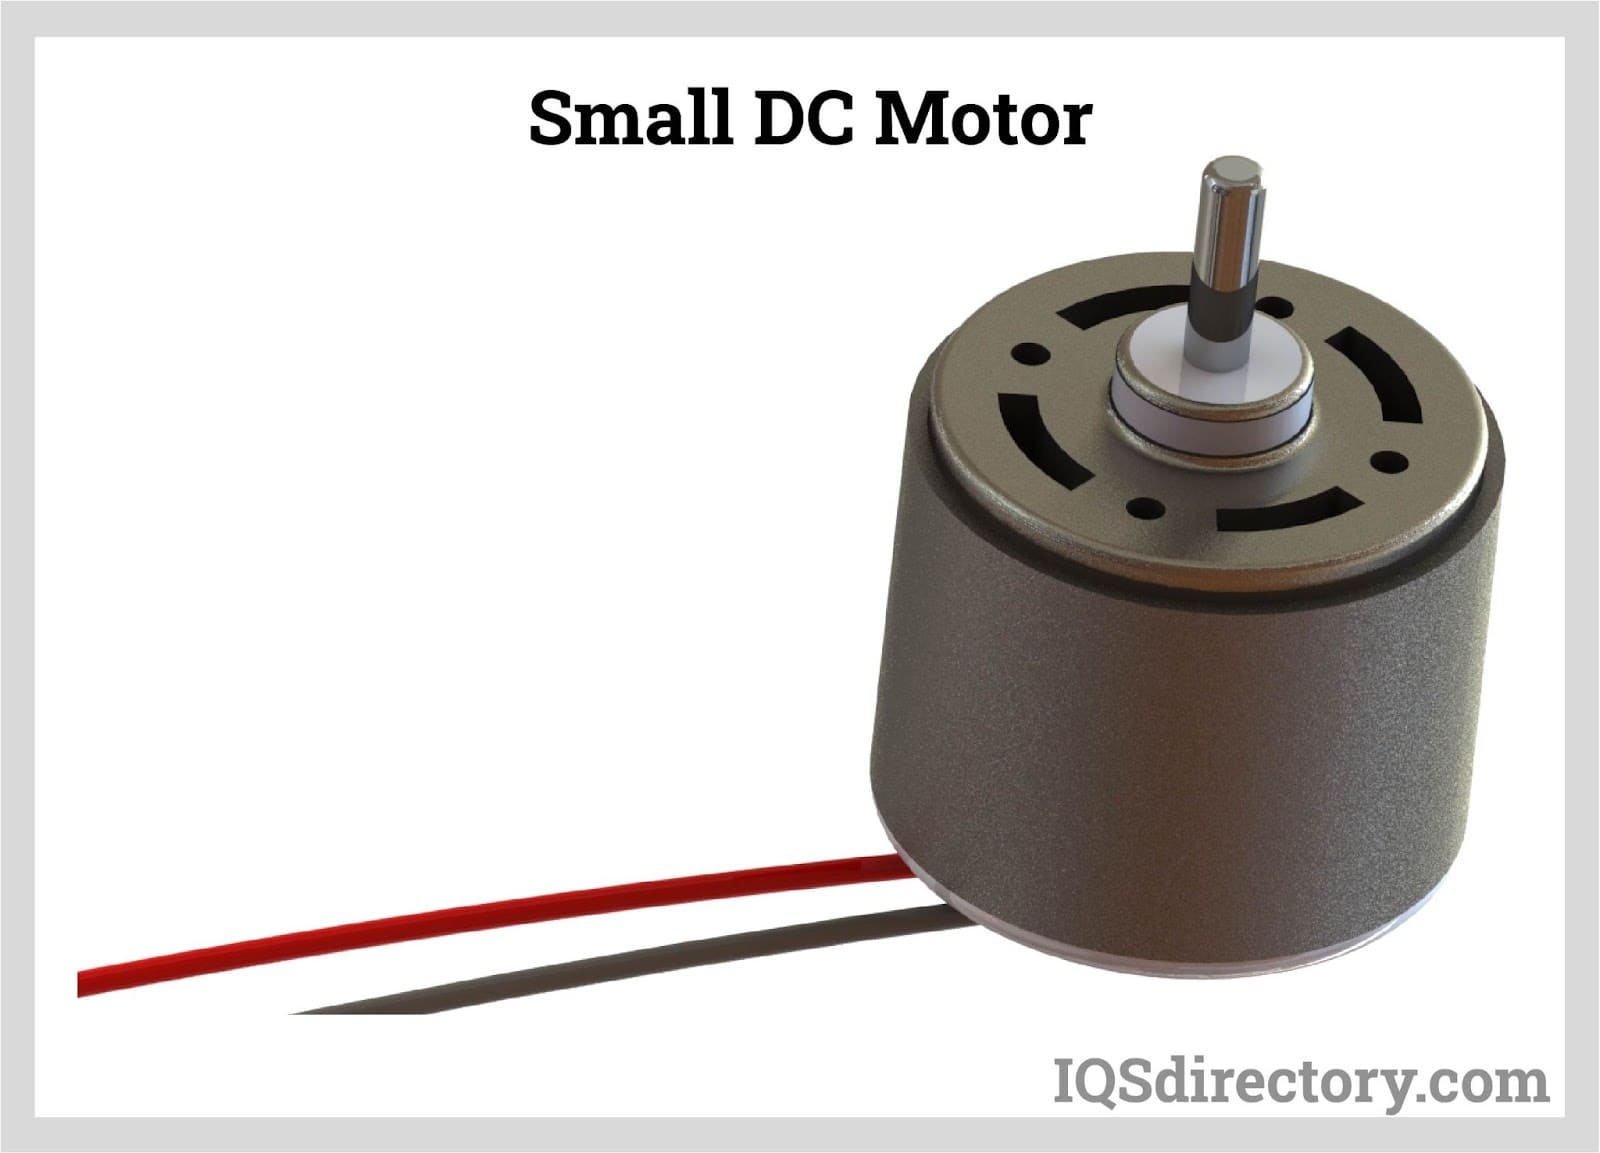 Small DC Motor